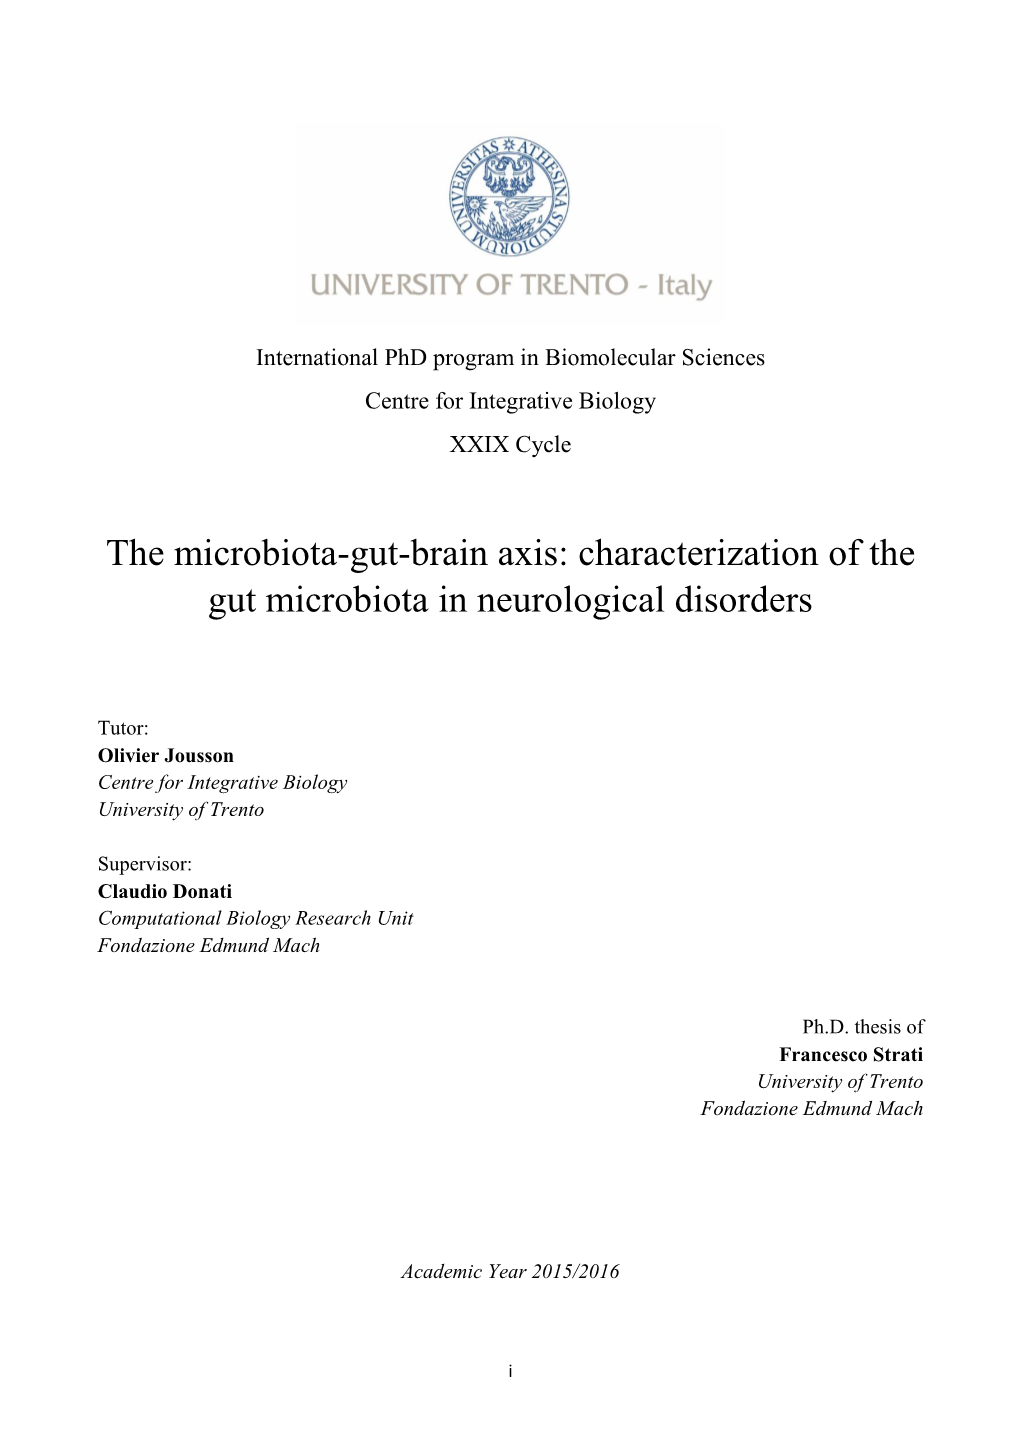 The Microbiota-Gut-Brain Axis: Characterization of the Gut Microbiota in Neurological Disorders